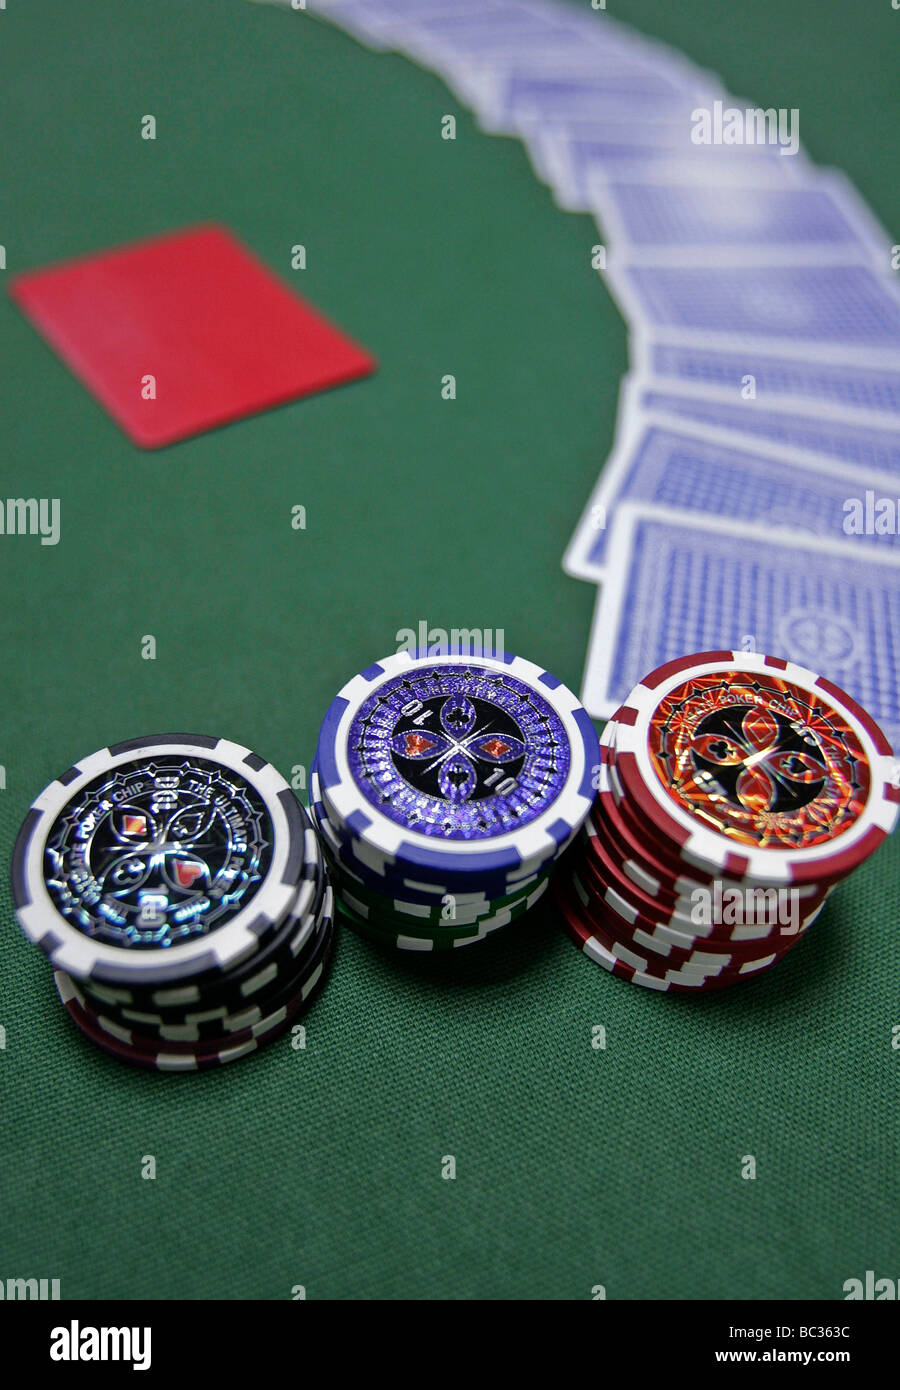 Poker Stock Photo